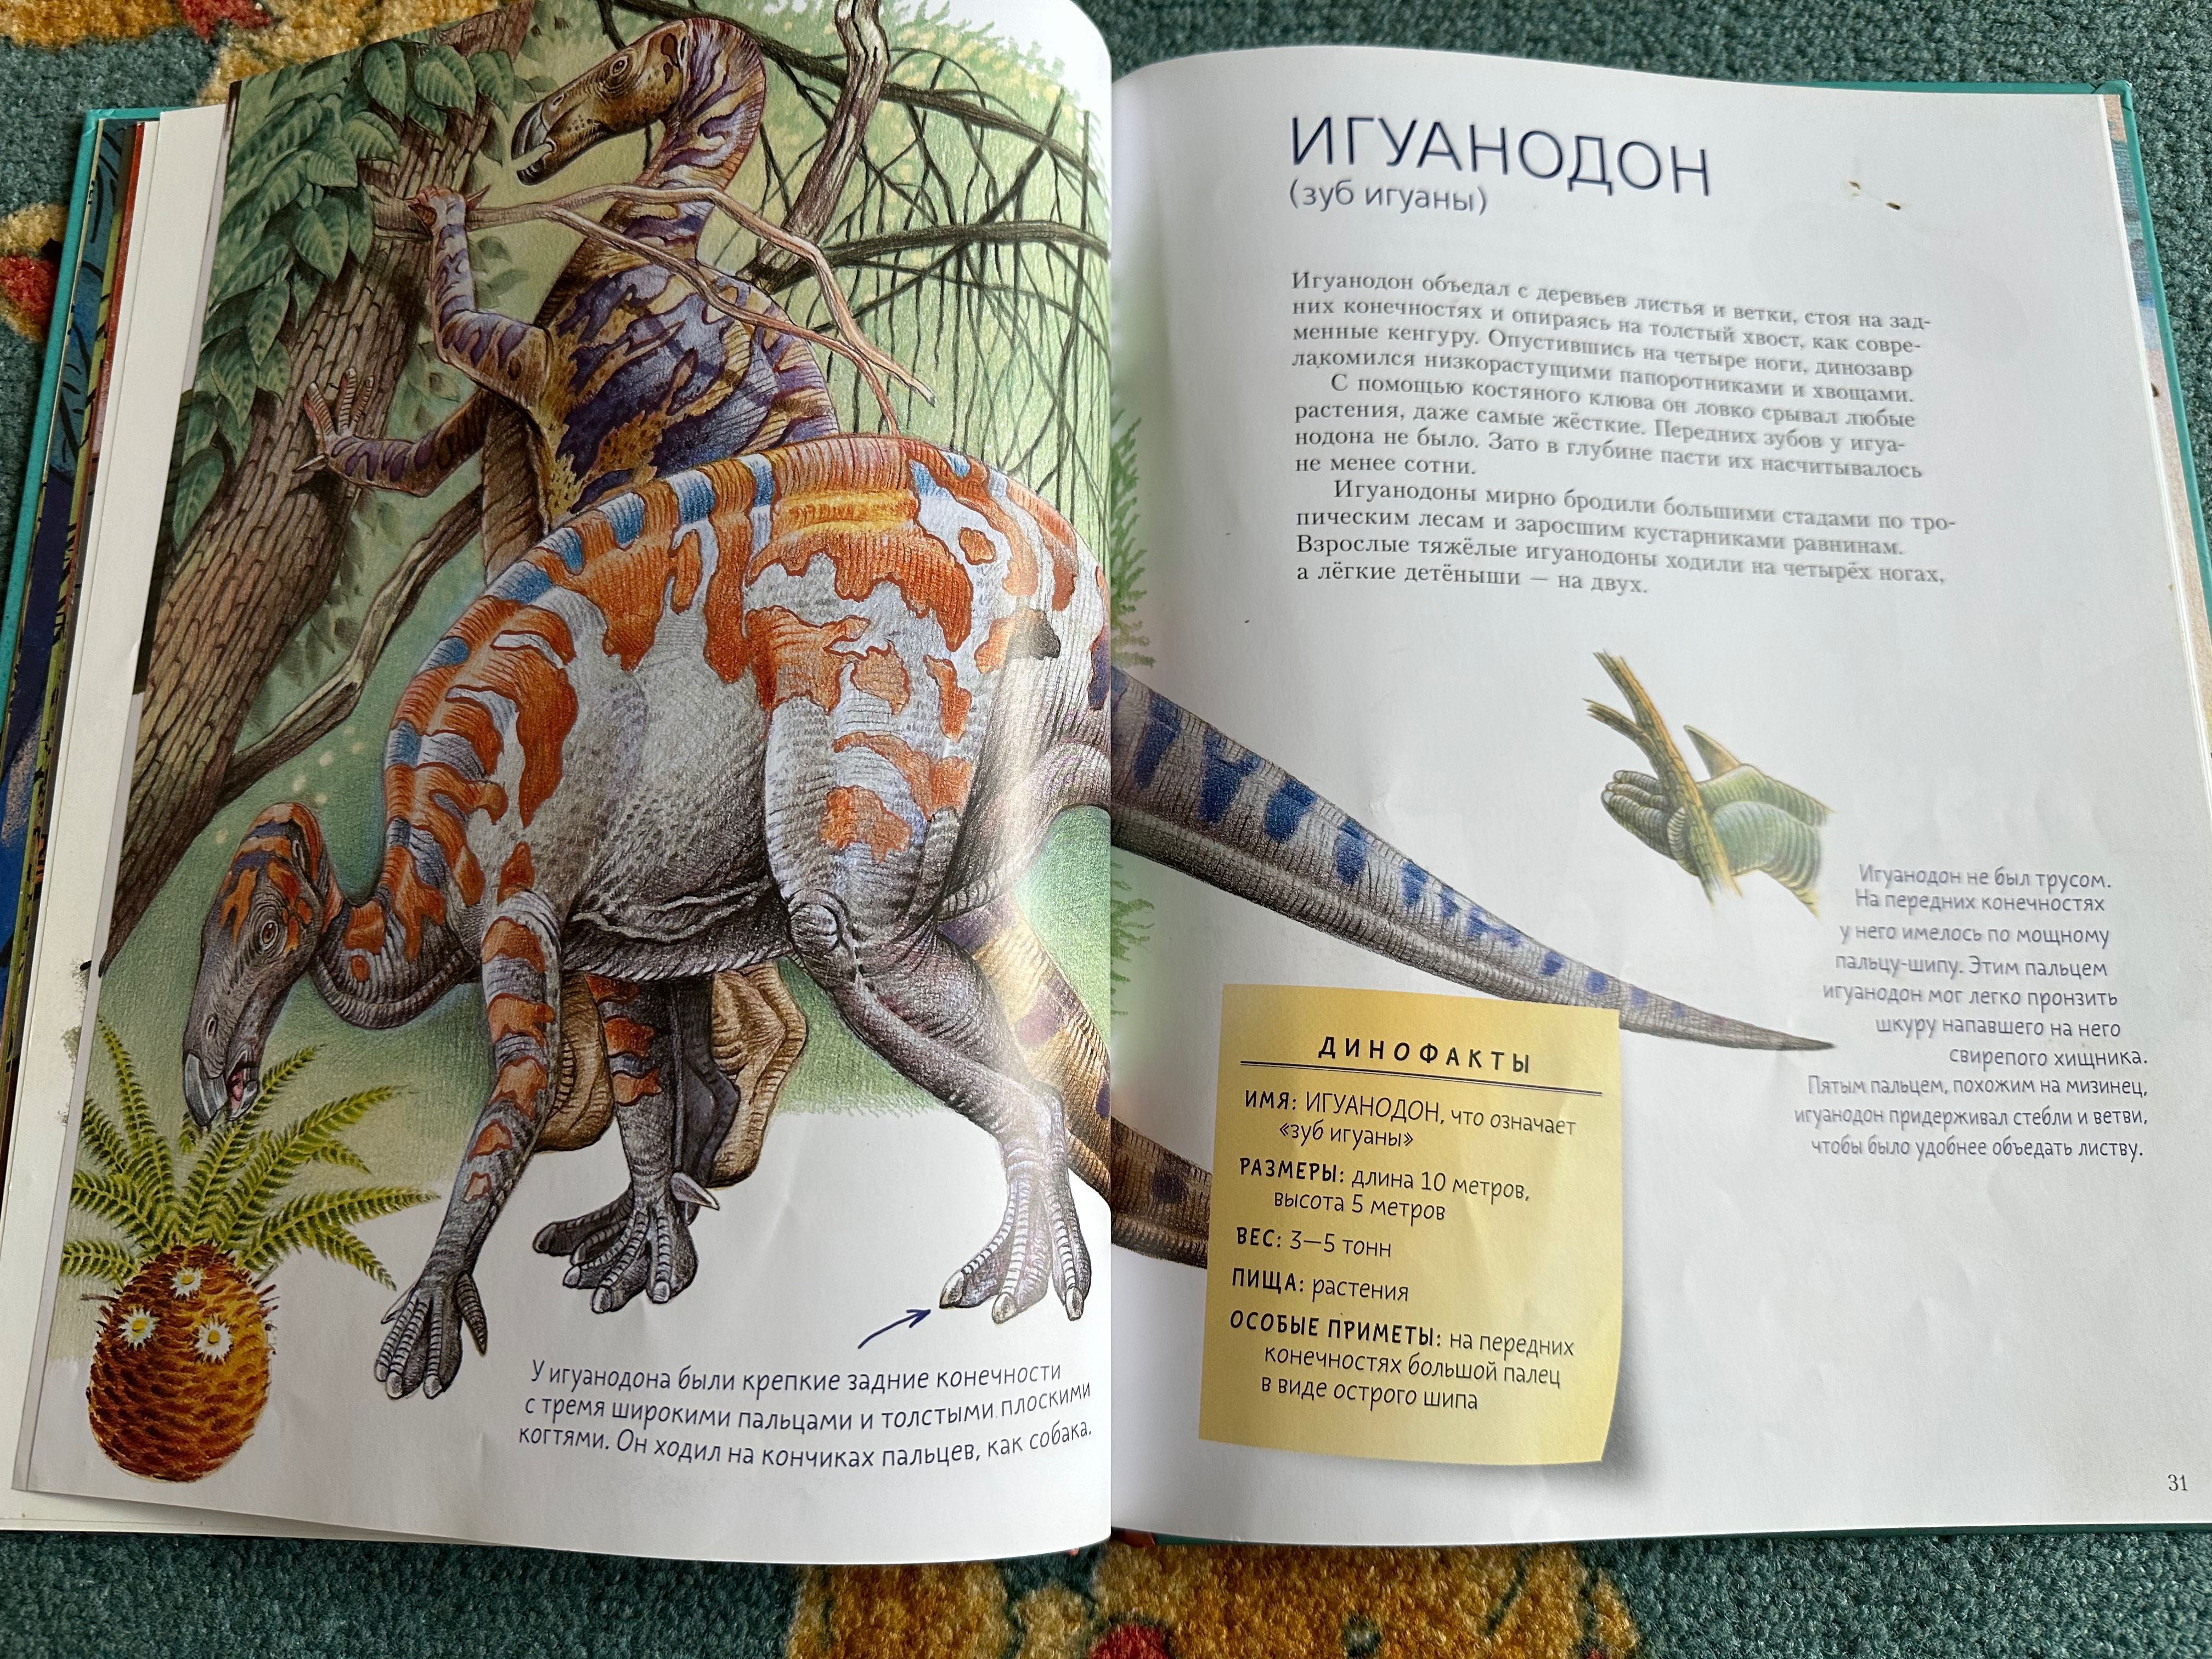 Книга Такие разние динозаври